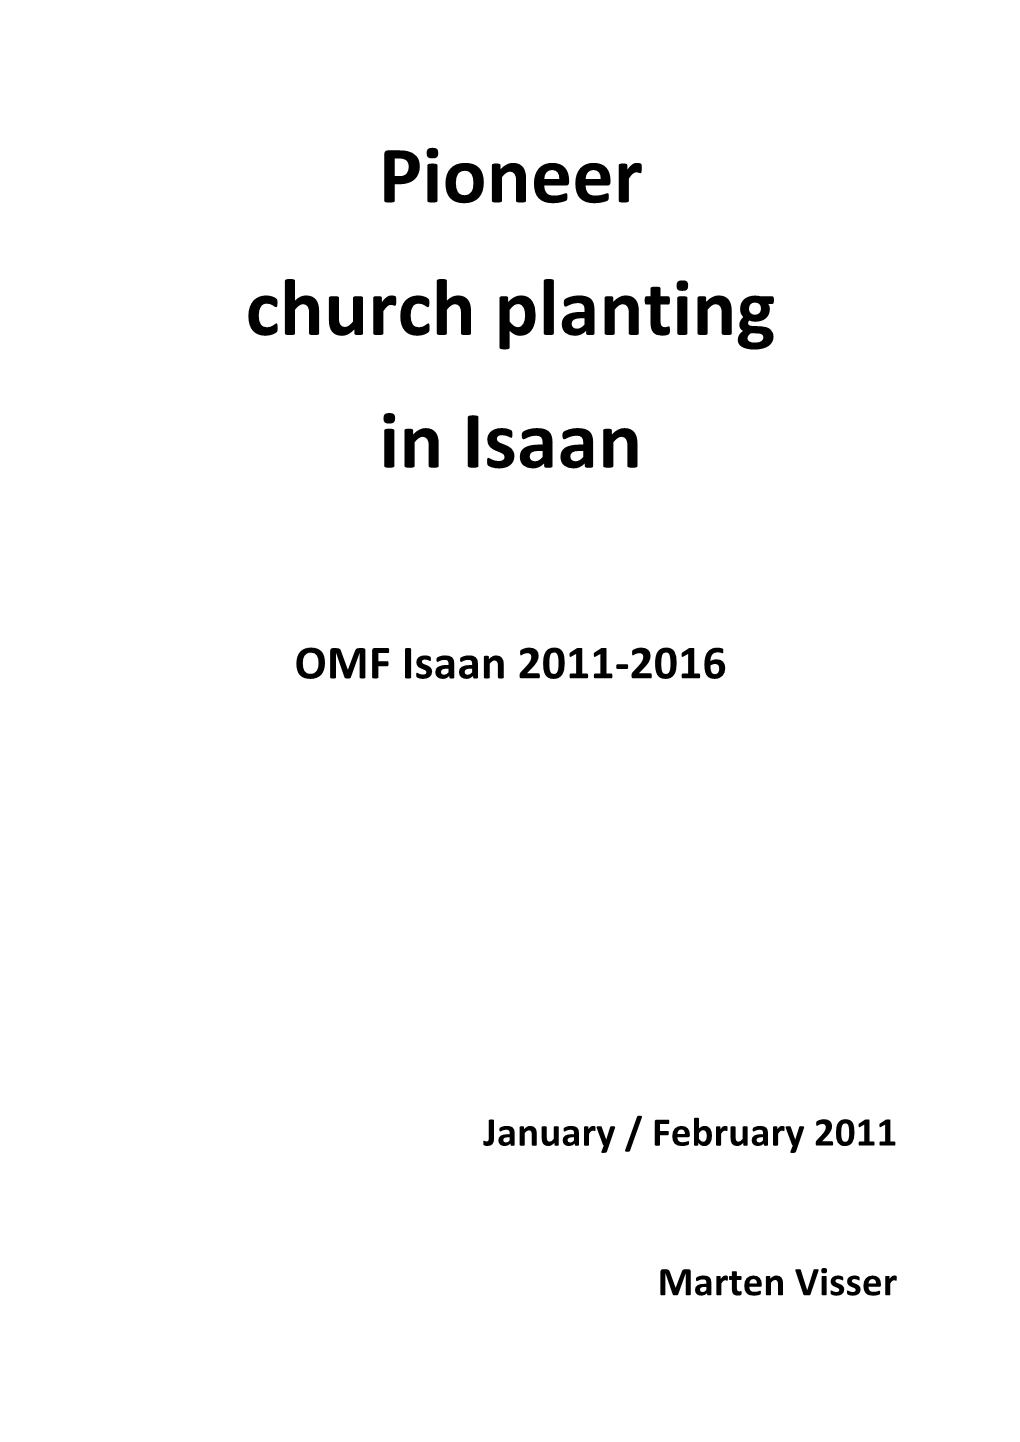 Pioneer Church Planting in Isaan